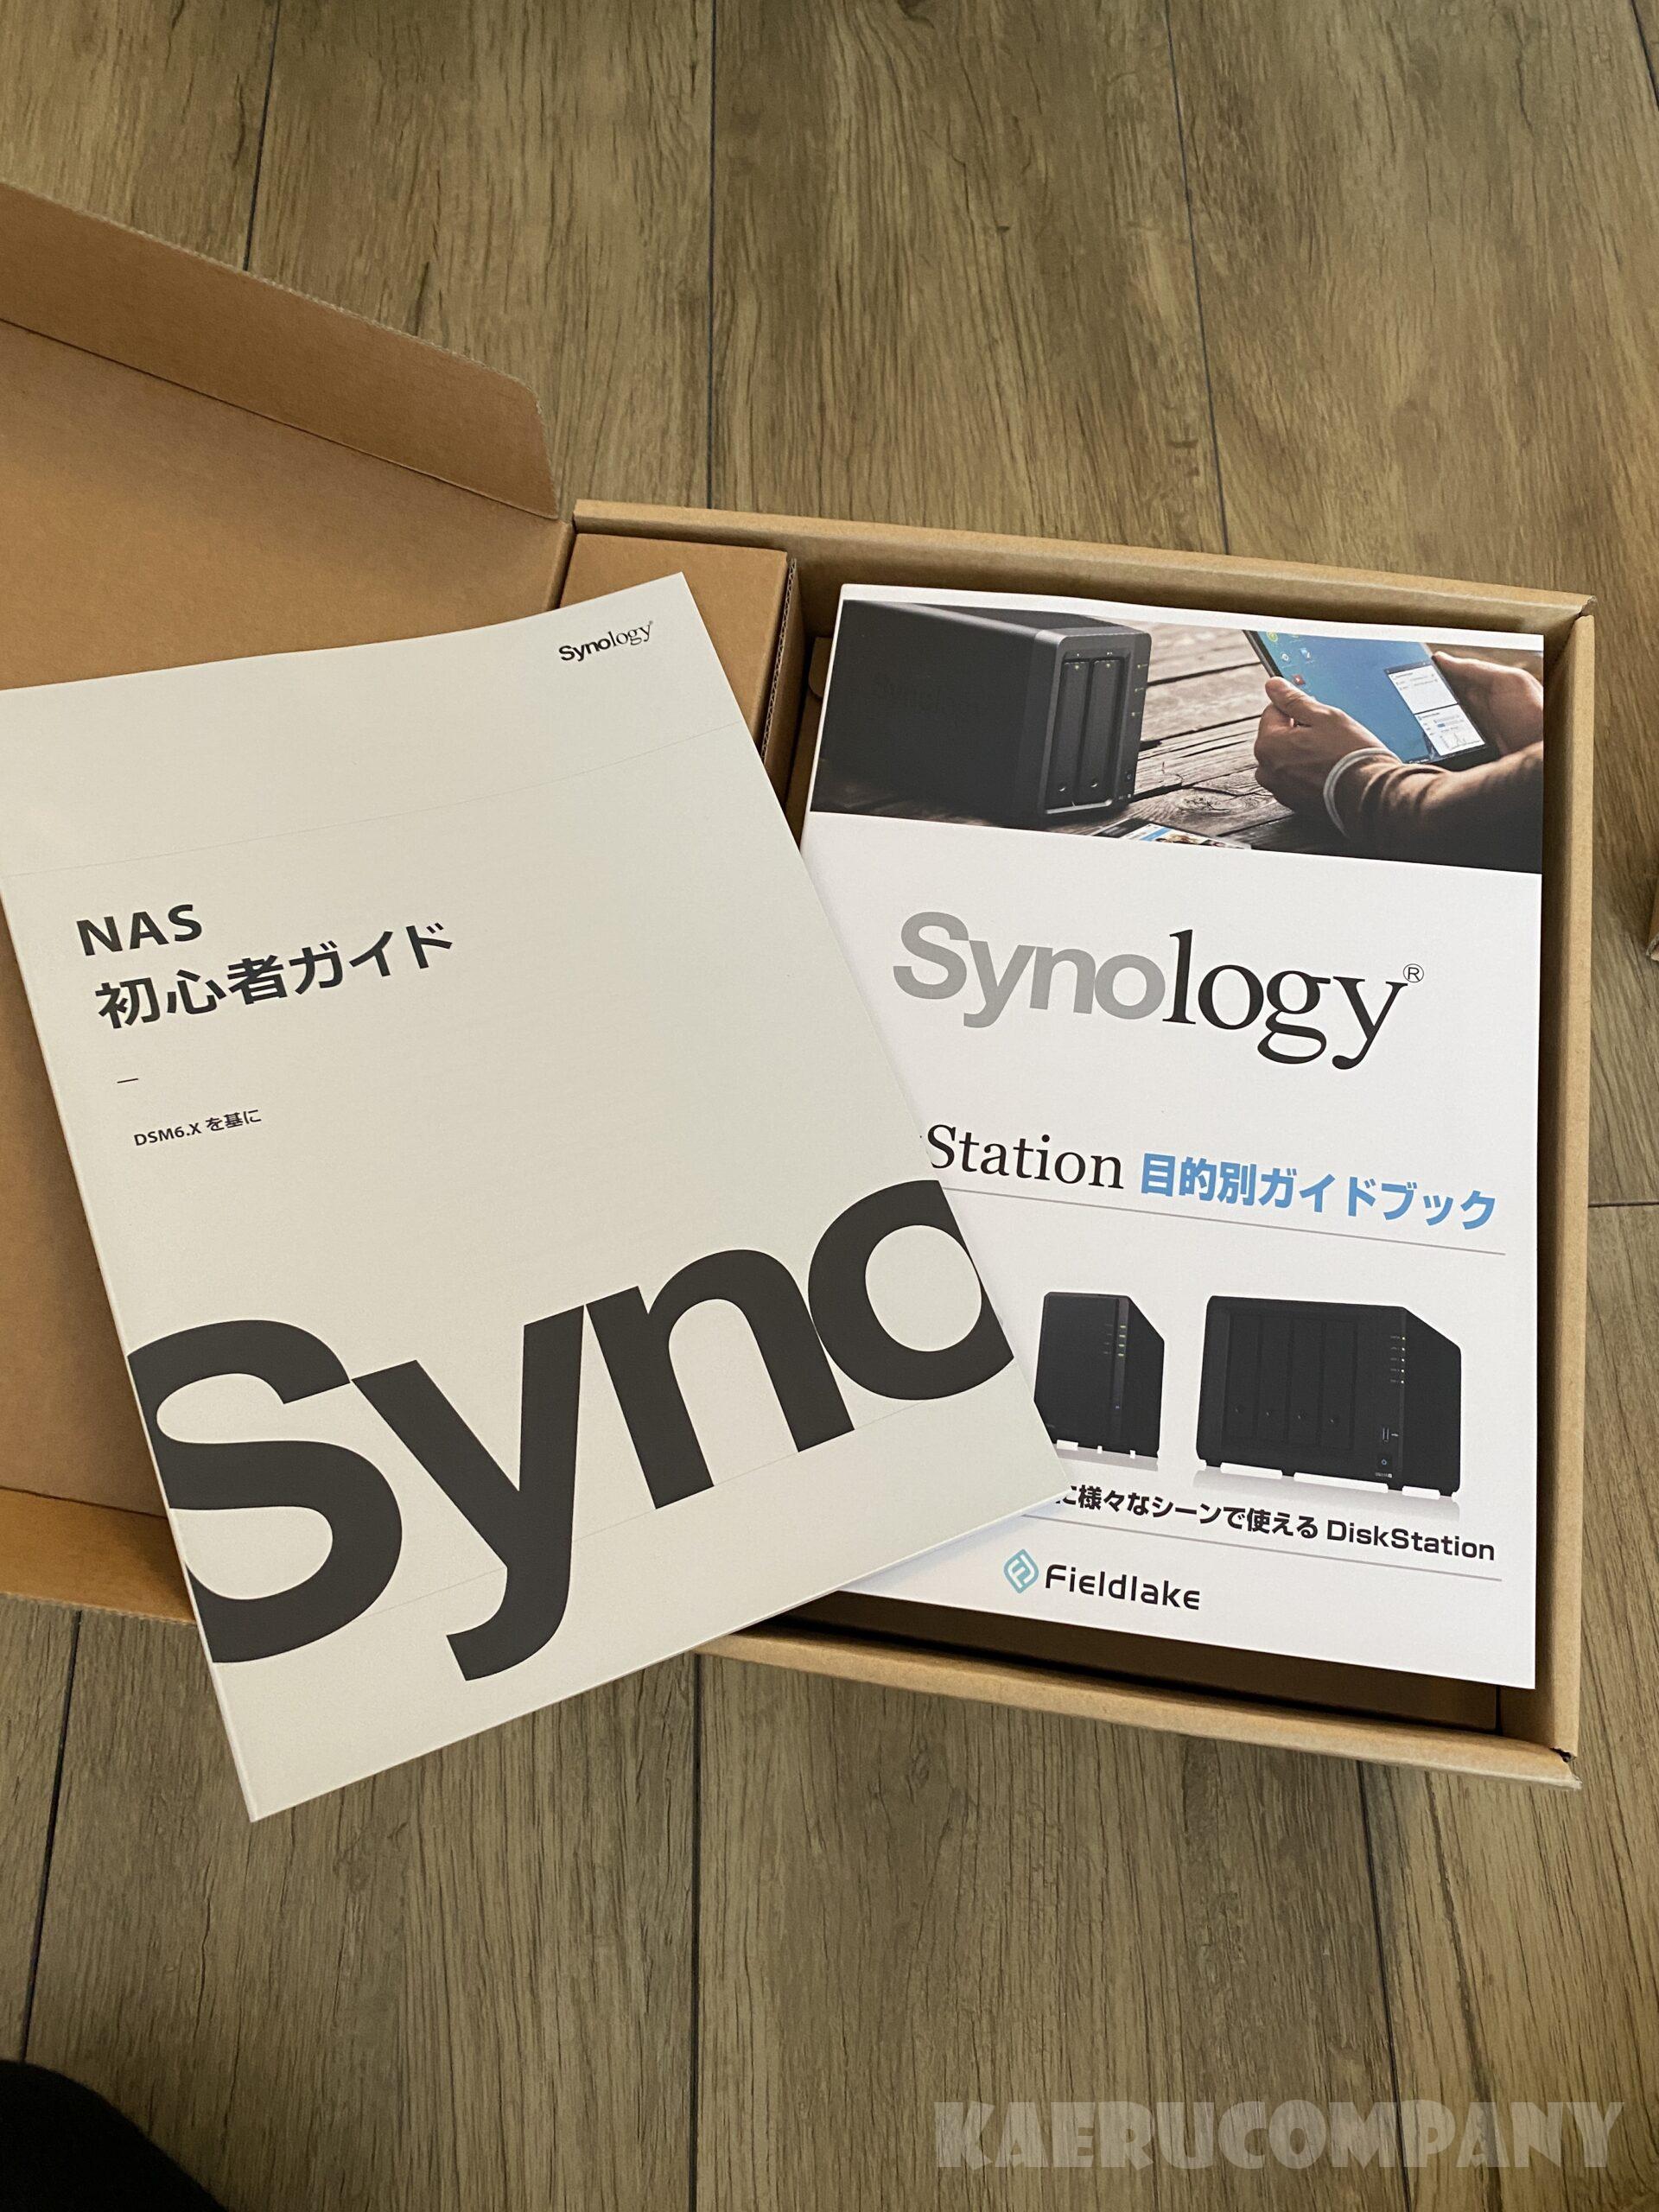 Synology DS220j NAS 日本語ガイドブック付